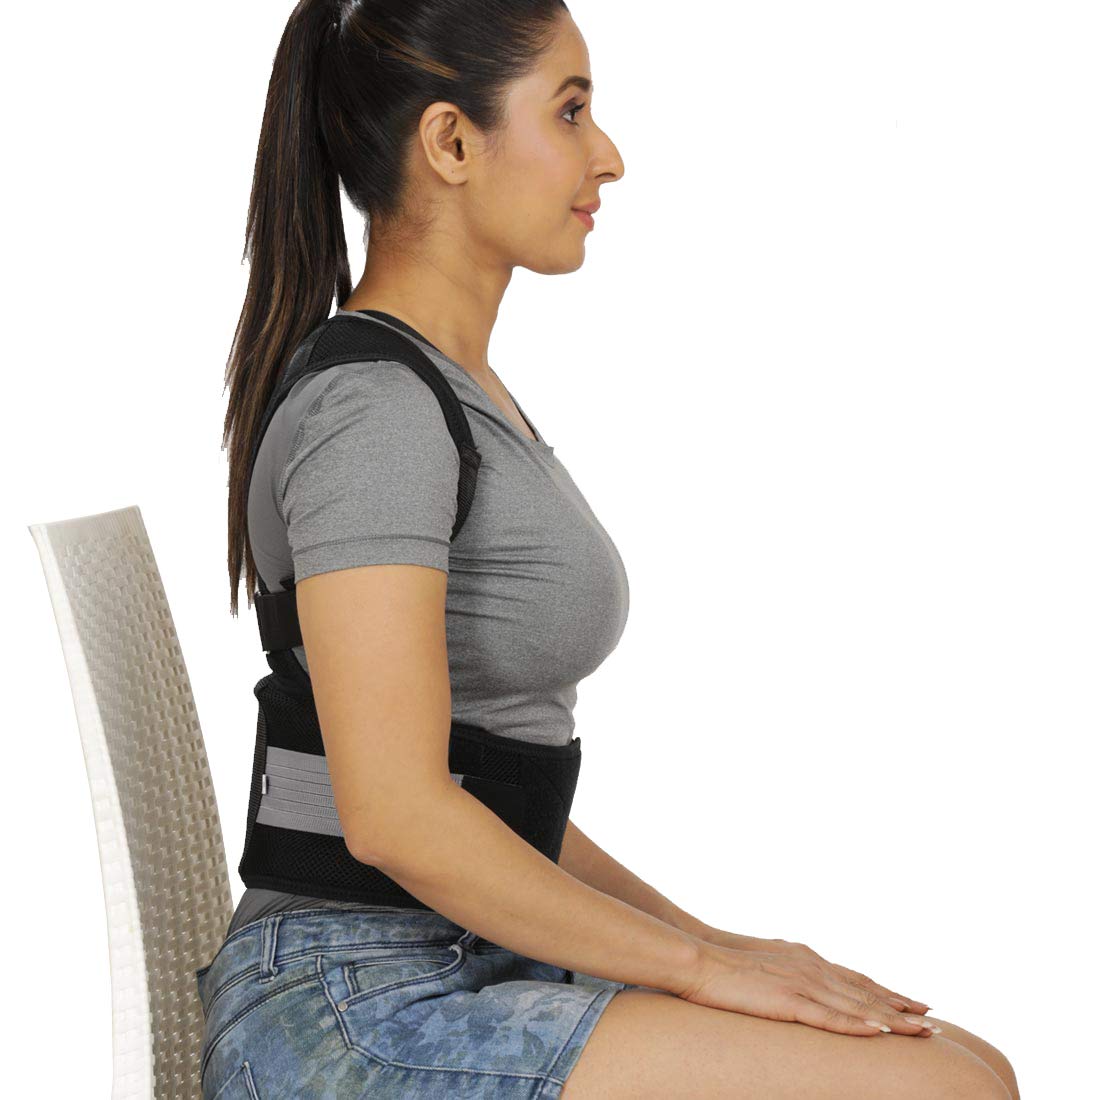 Complete Back Posture Support Belt - Black, Shop Today. Get it Tomorrow!